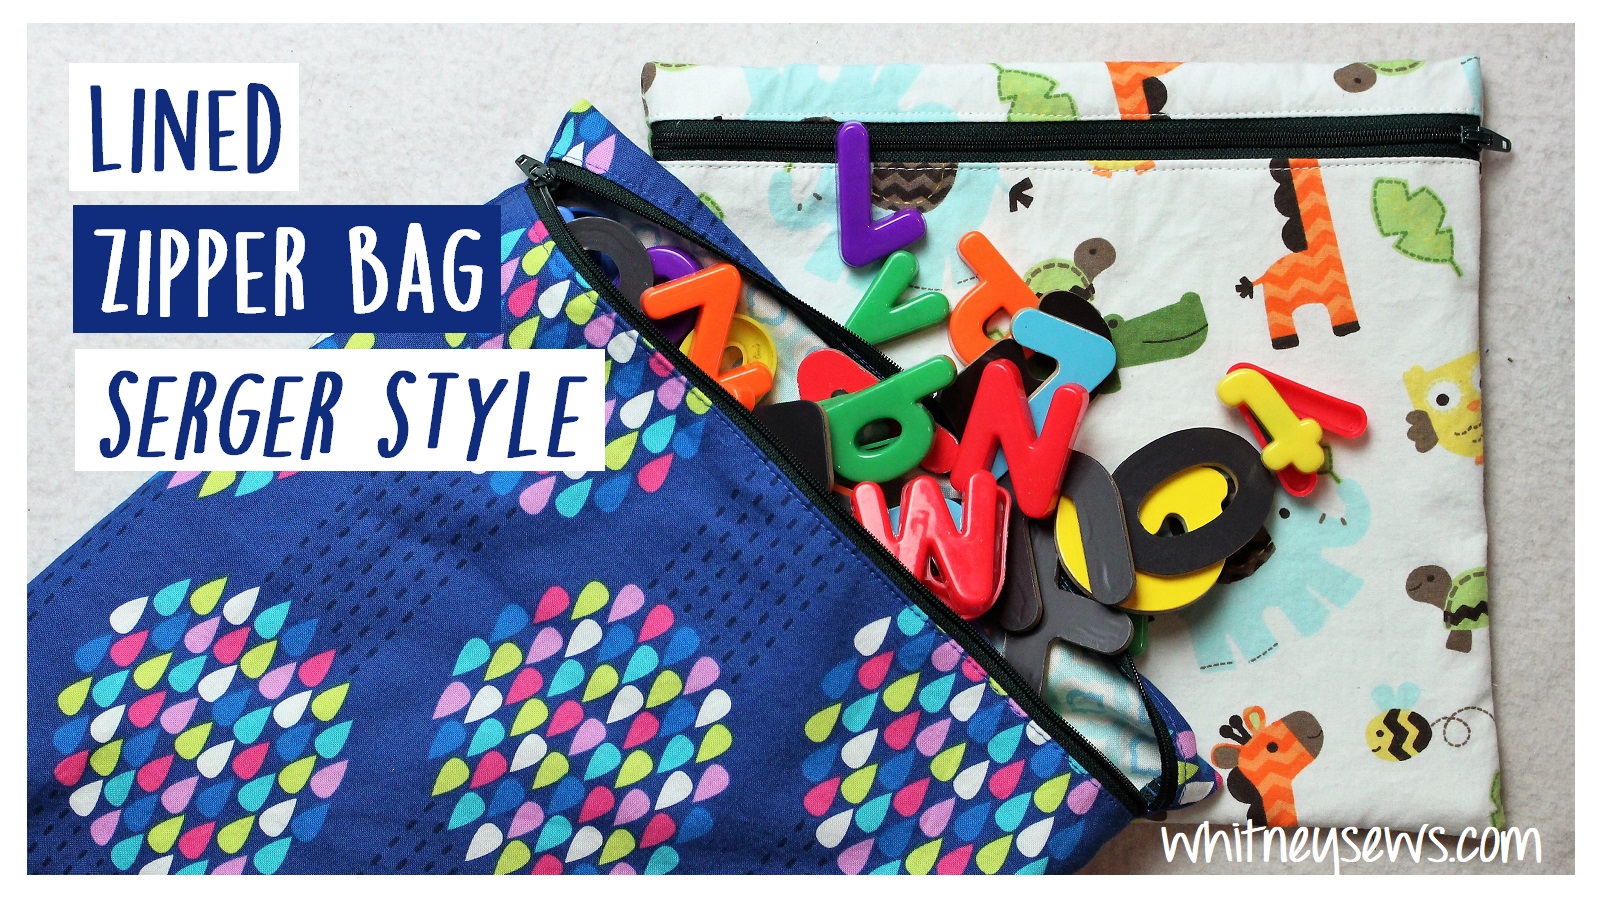 Cross Stitch Project Bag - Whitney Sews